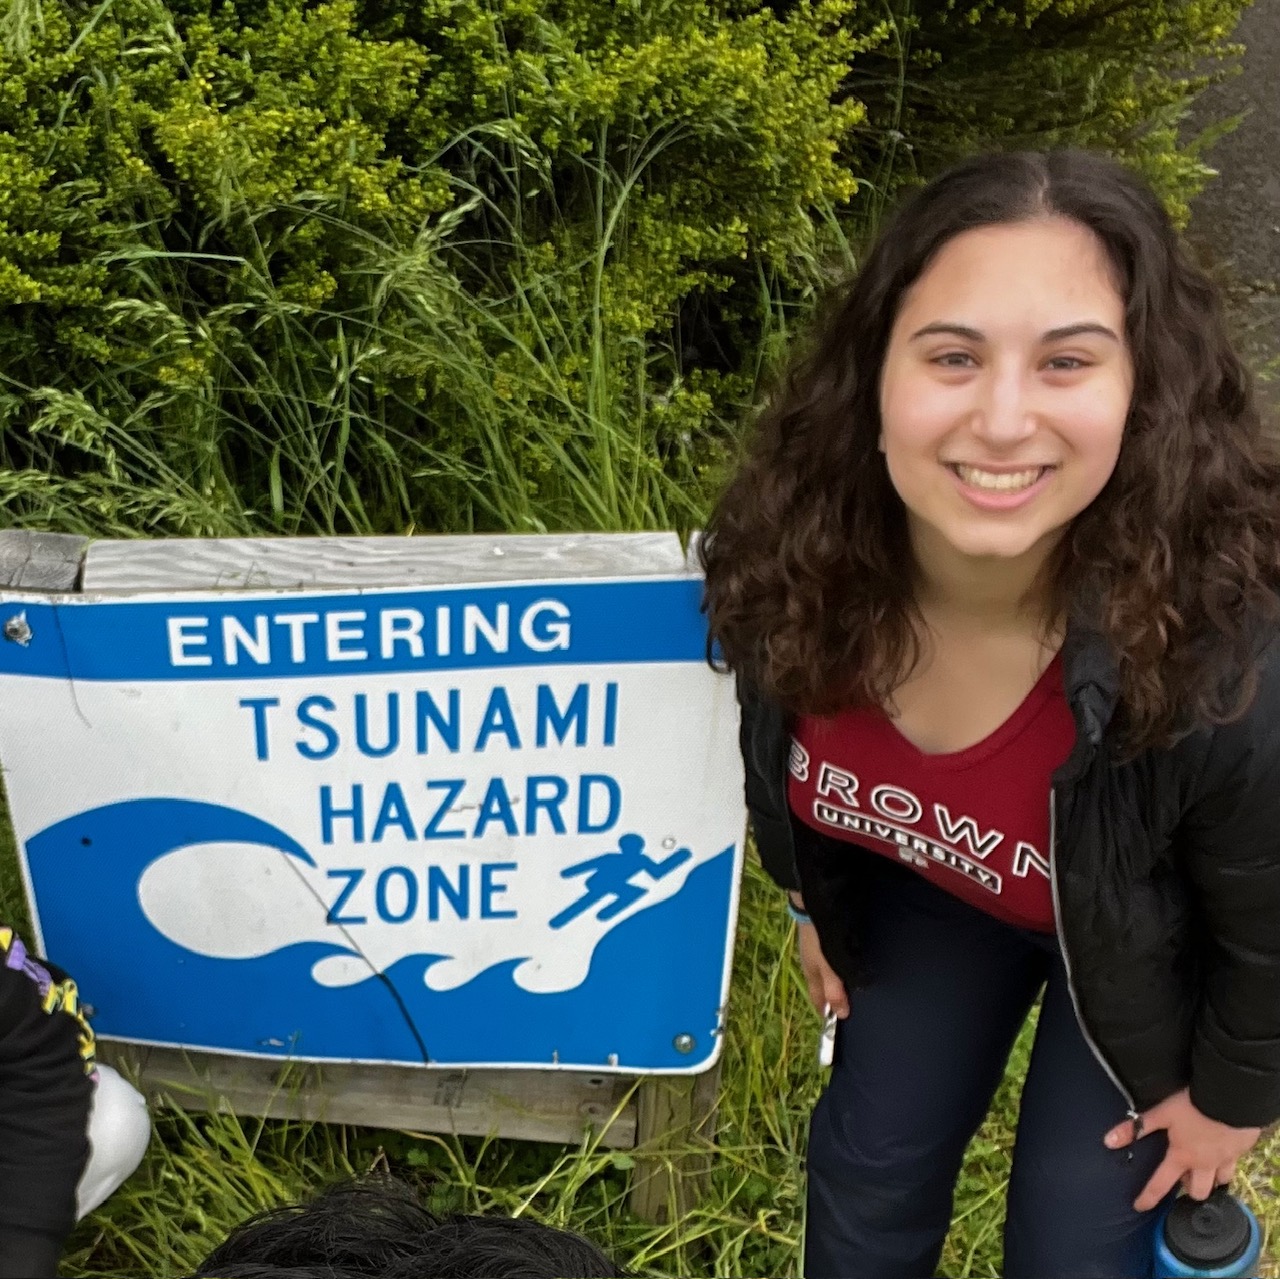 Allison Cavallo beside a tsunami hazard zone sign